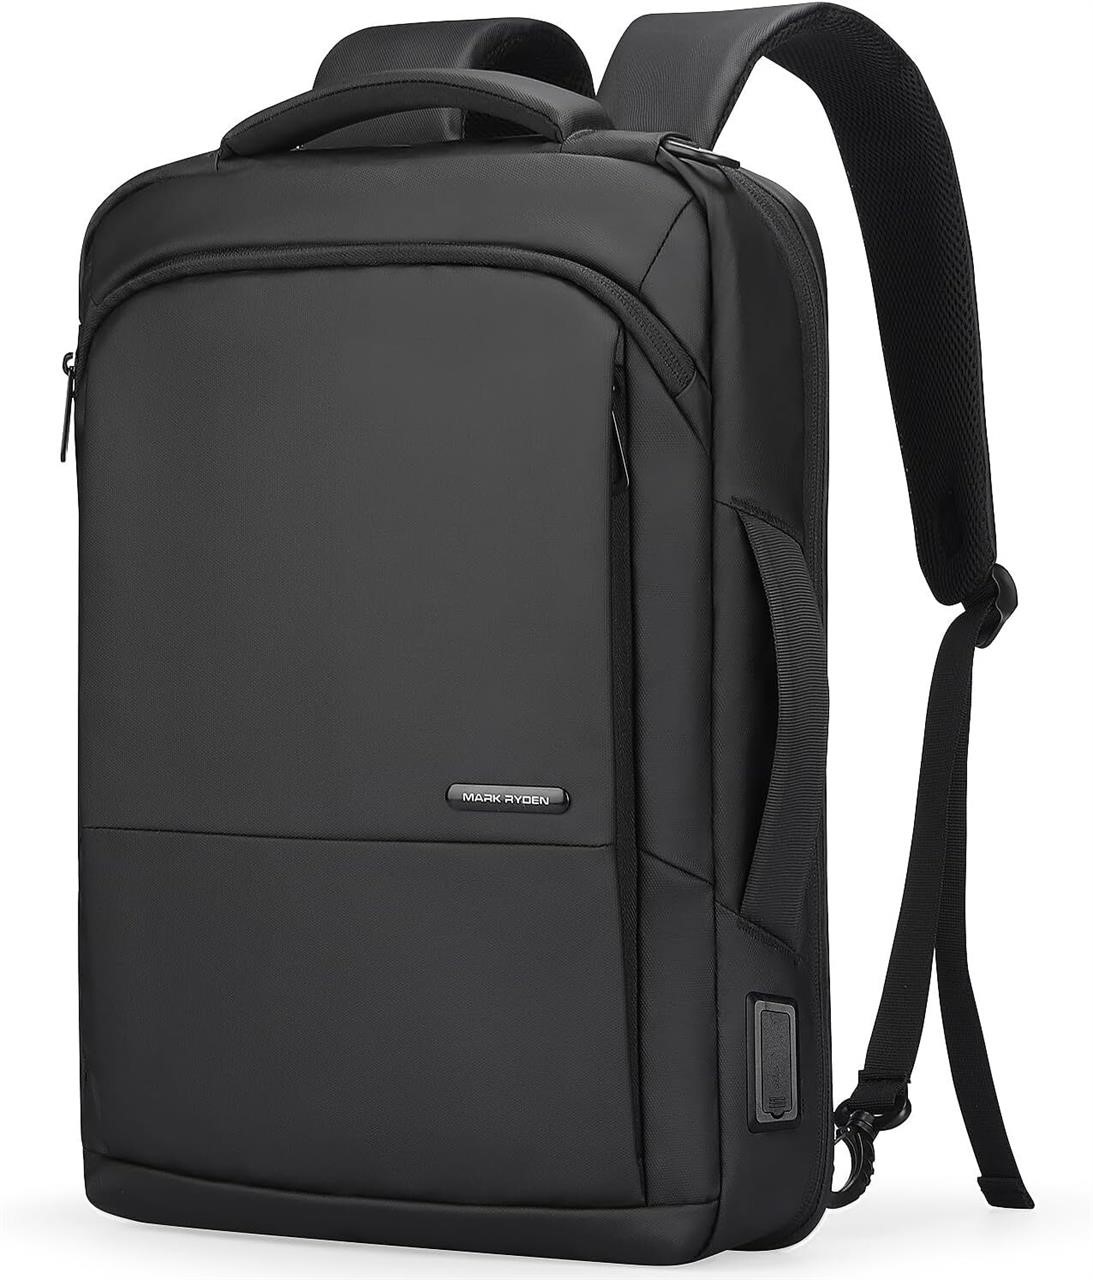 Markryden 3in1 Laptop Backpack  Fits 15.6 Inch